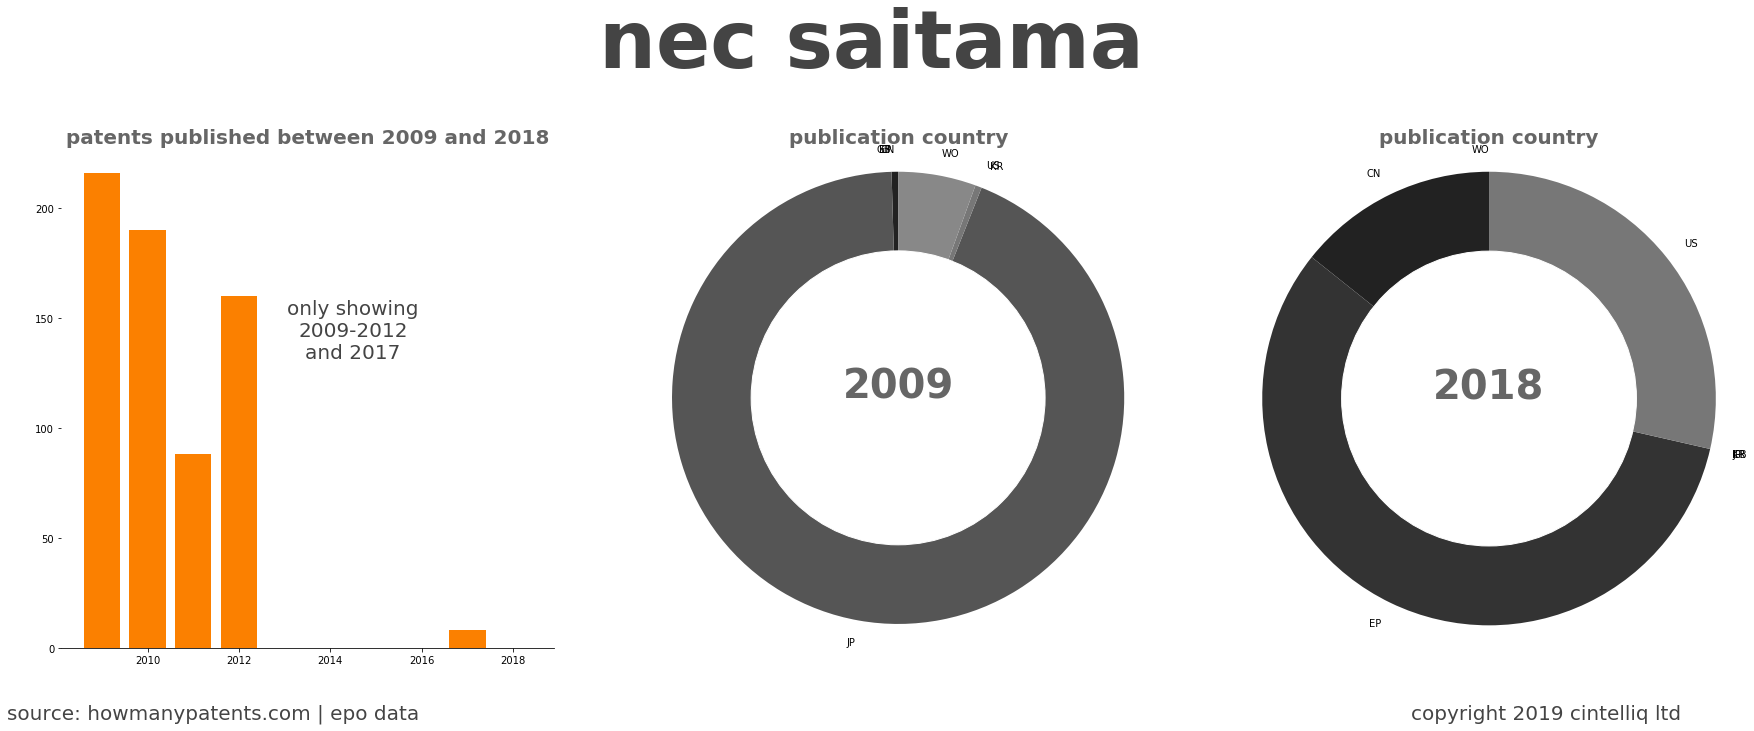 summary of patents for Nec Saitama